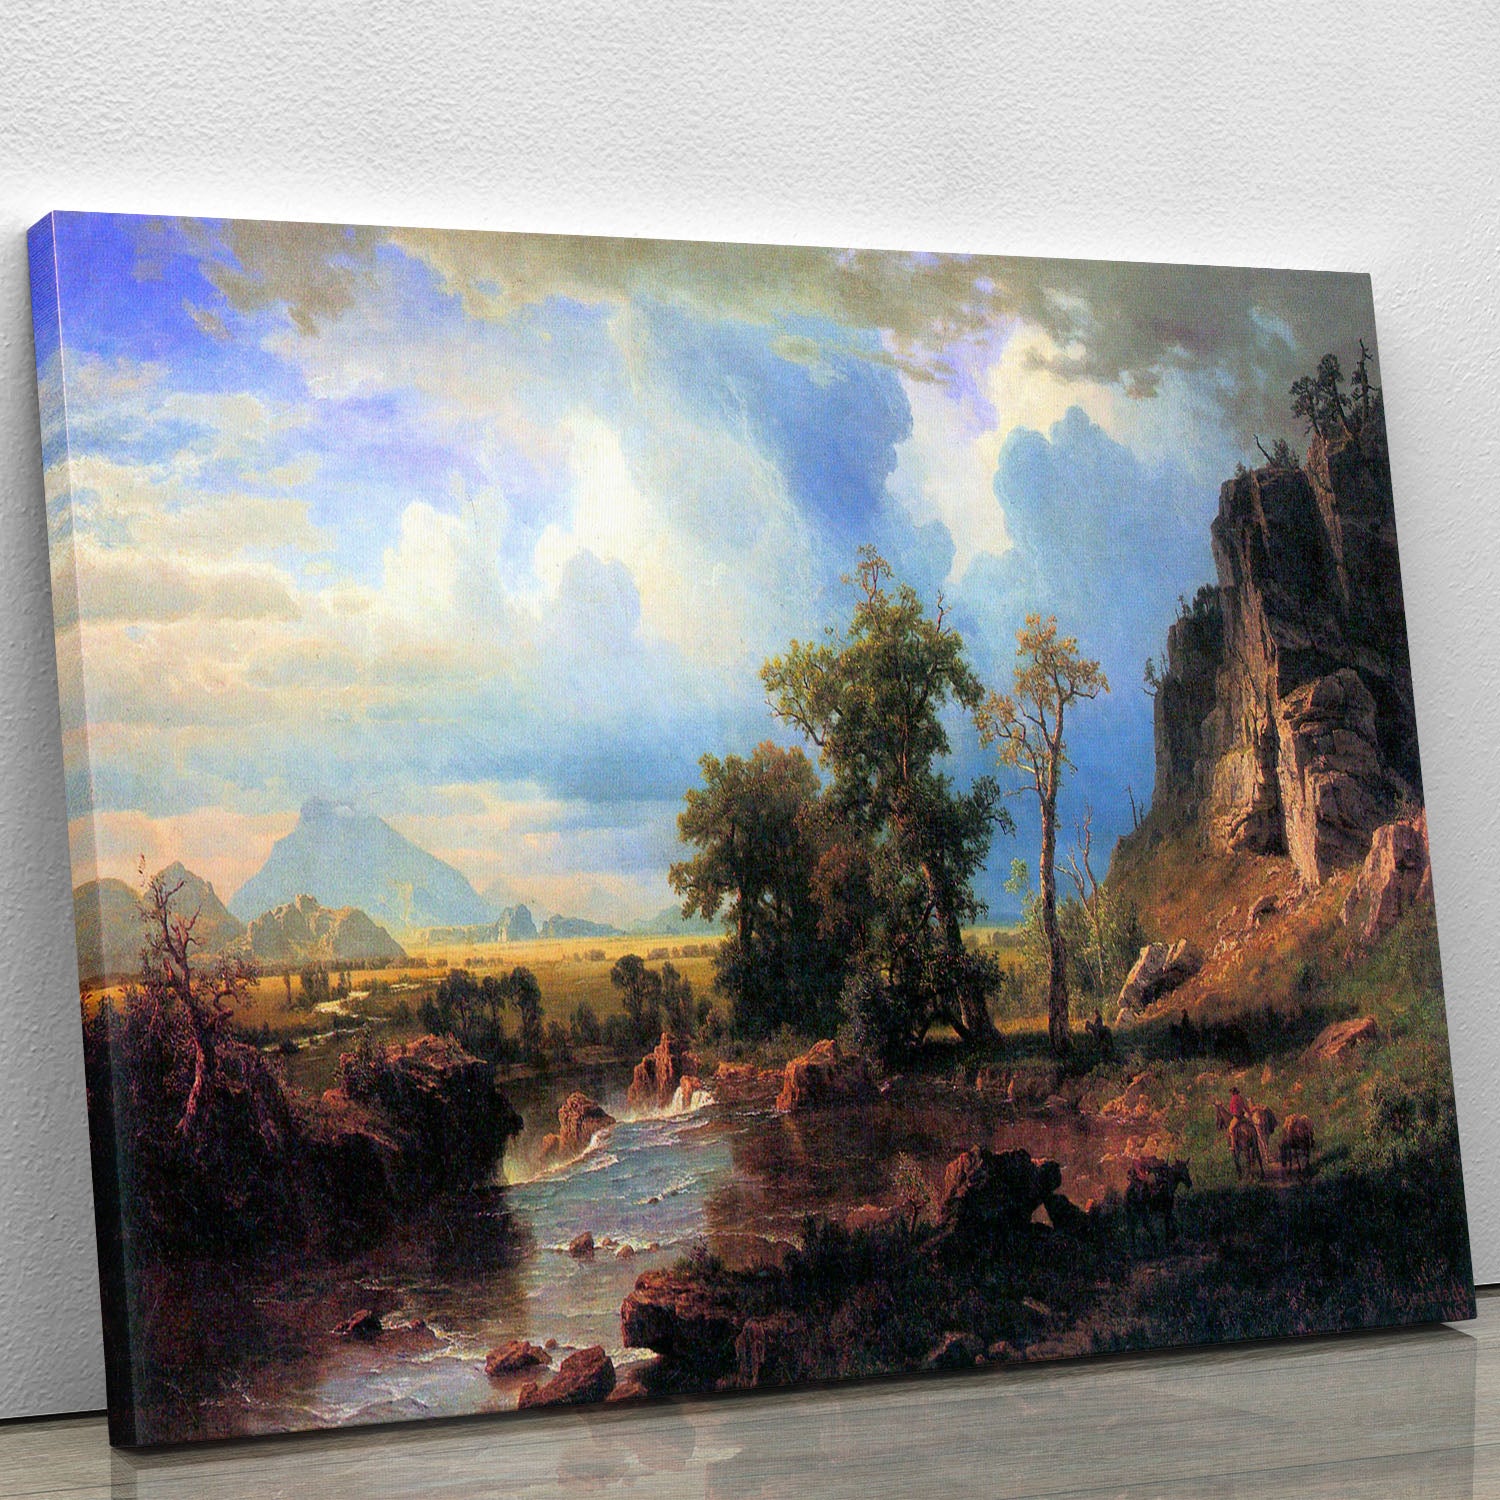 Northern fork of the Plate Nebraska by Bierstadt Canvas Print or Poster - Canvas Art Rocks - 1